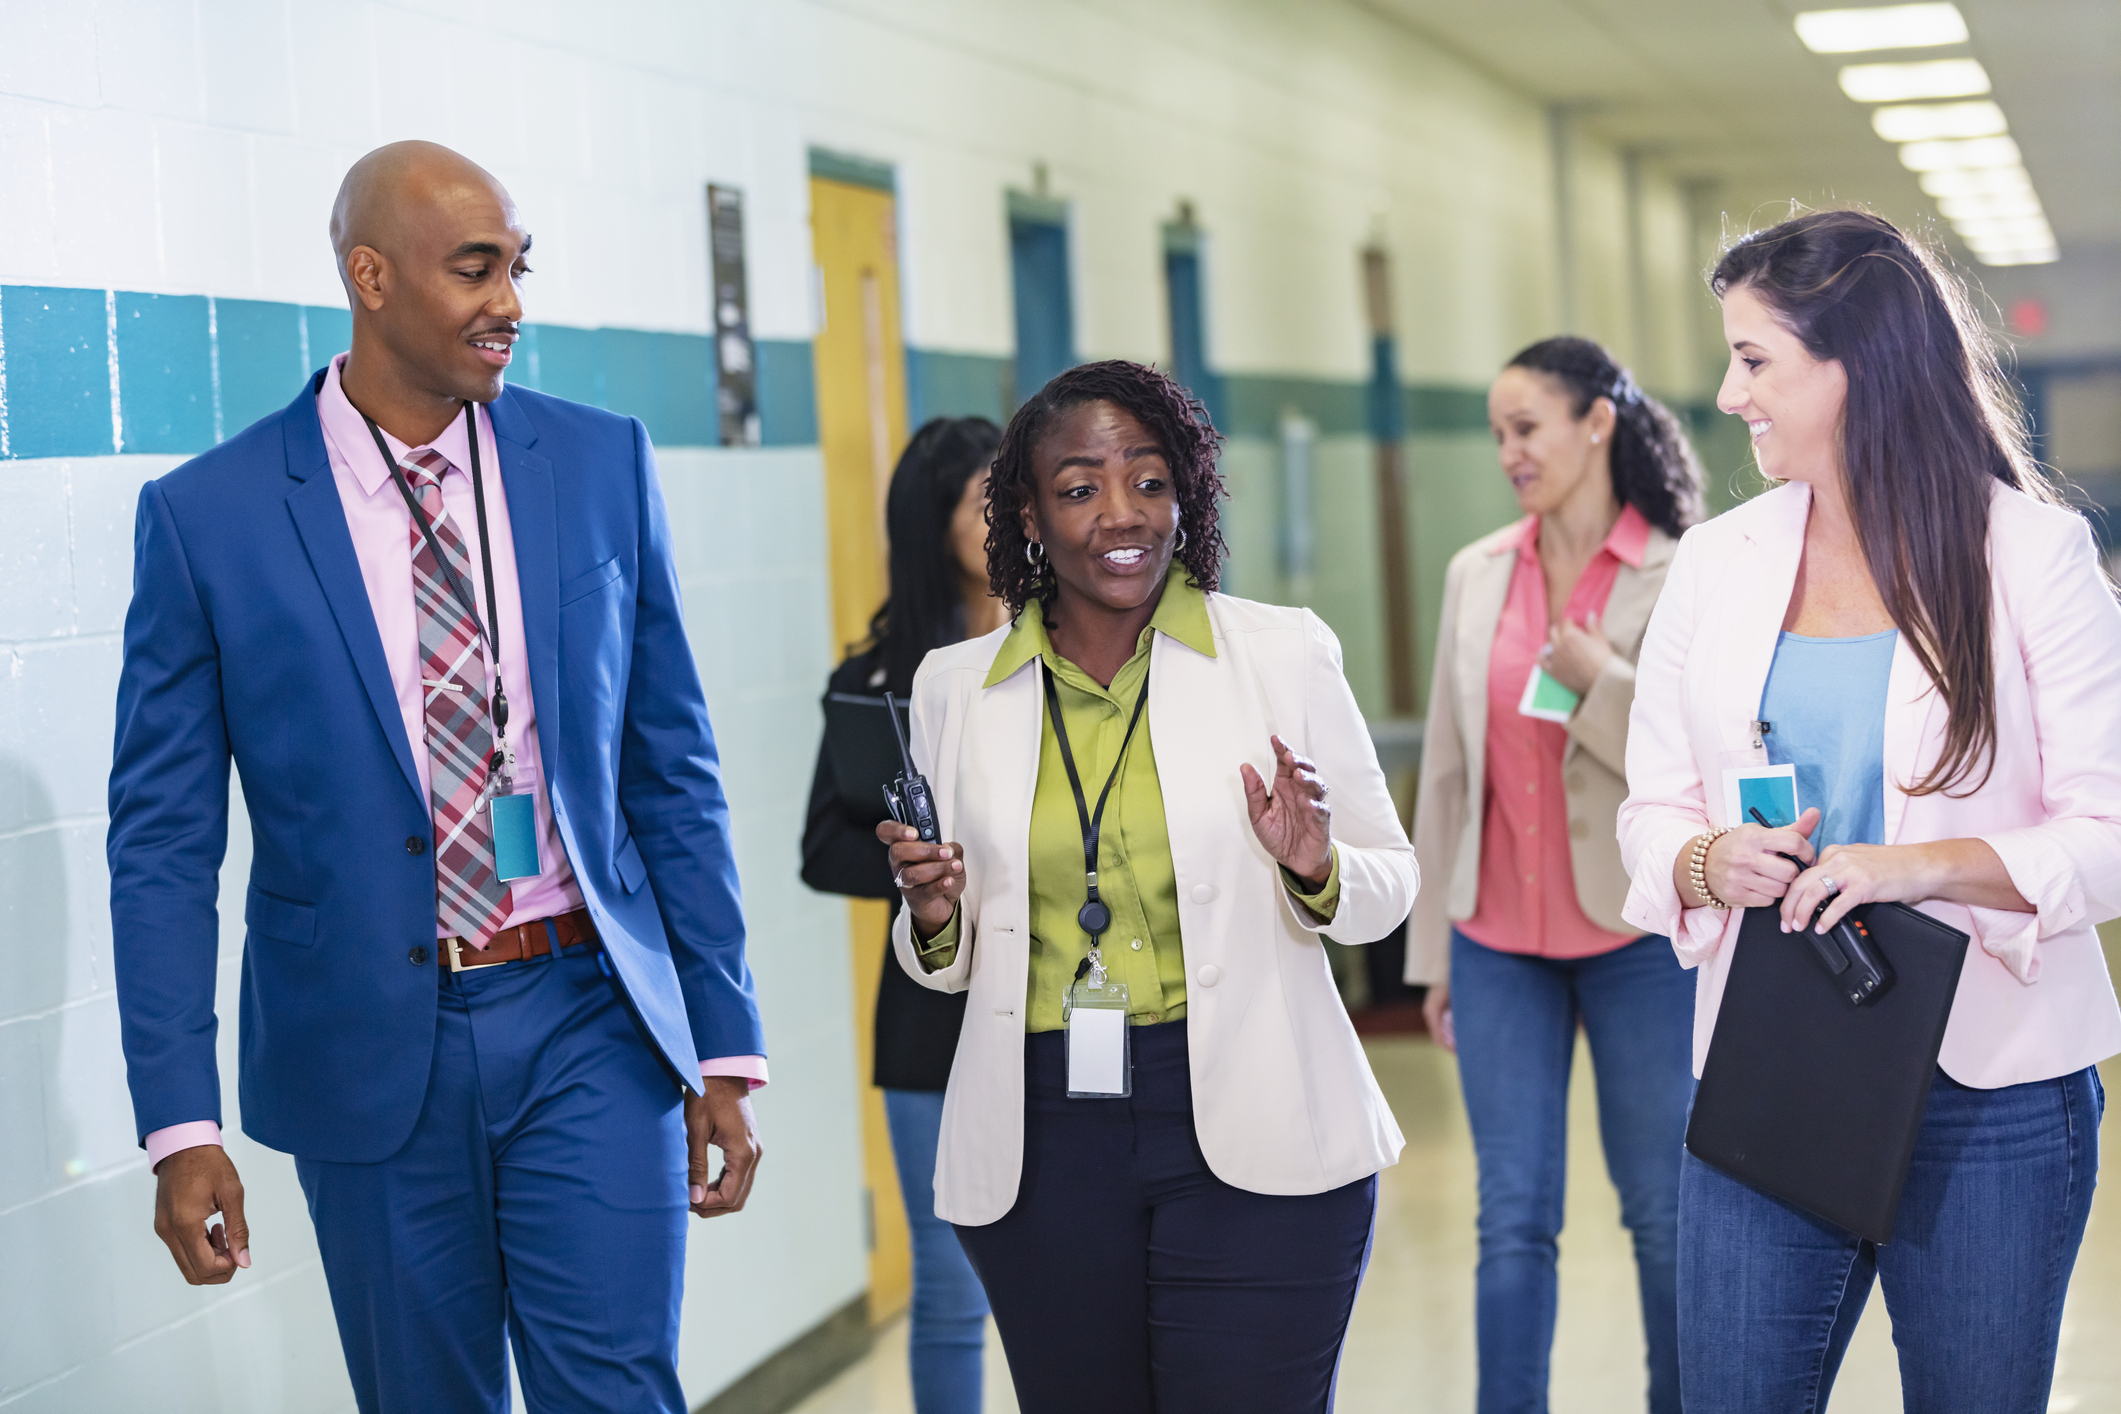 Multiracial group of teachers walking in school hallway. Image credit: iStock